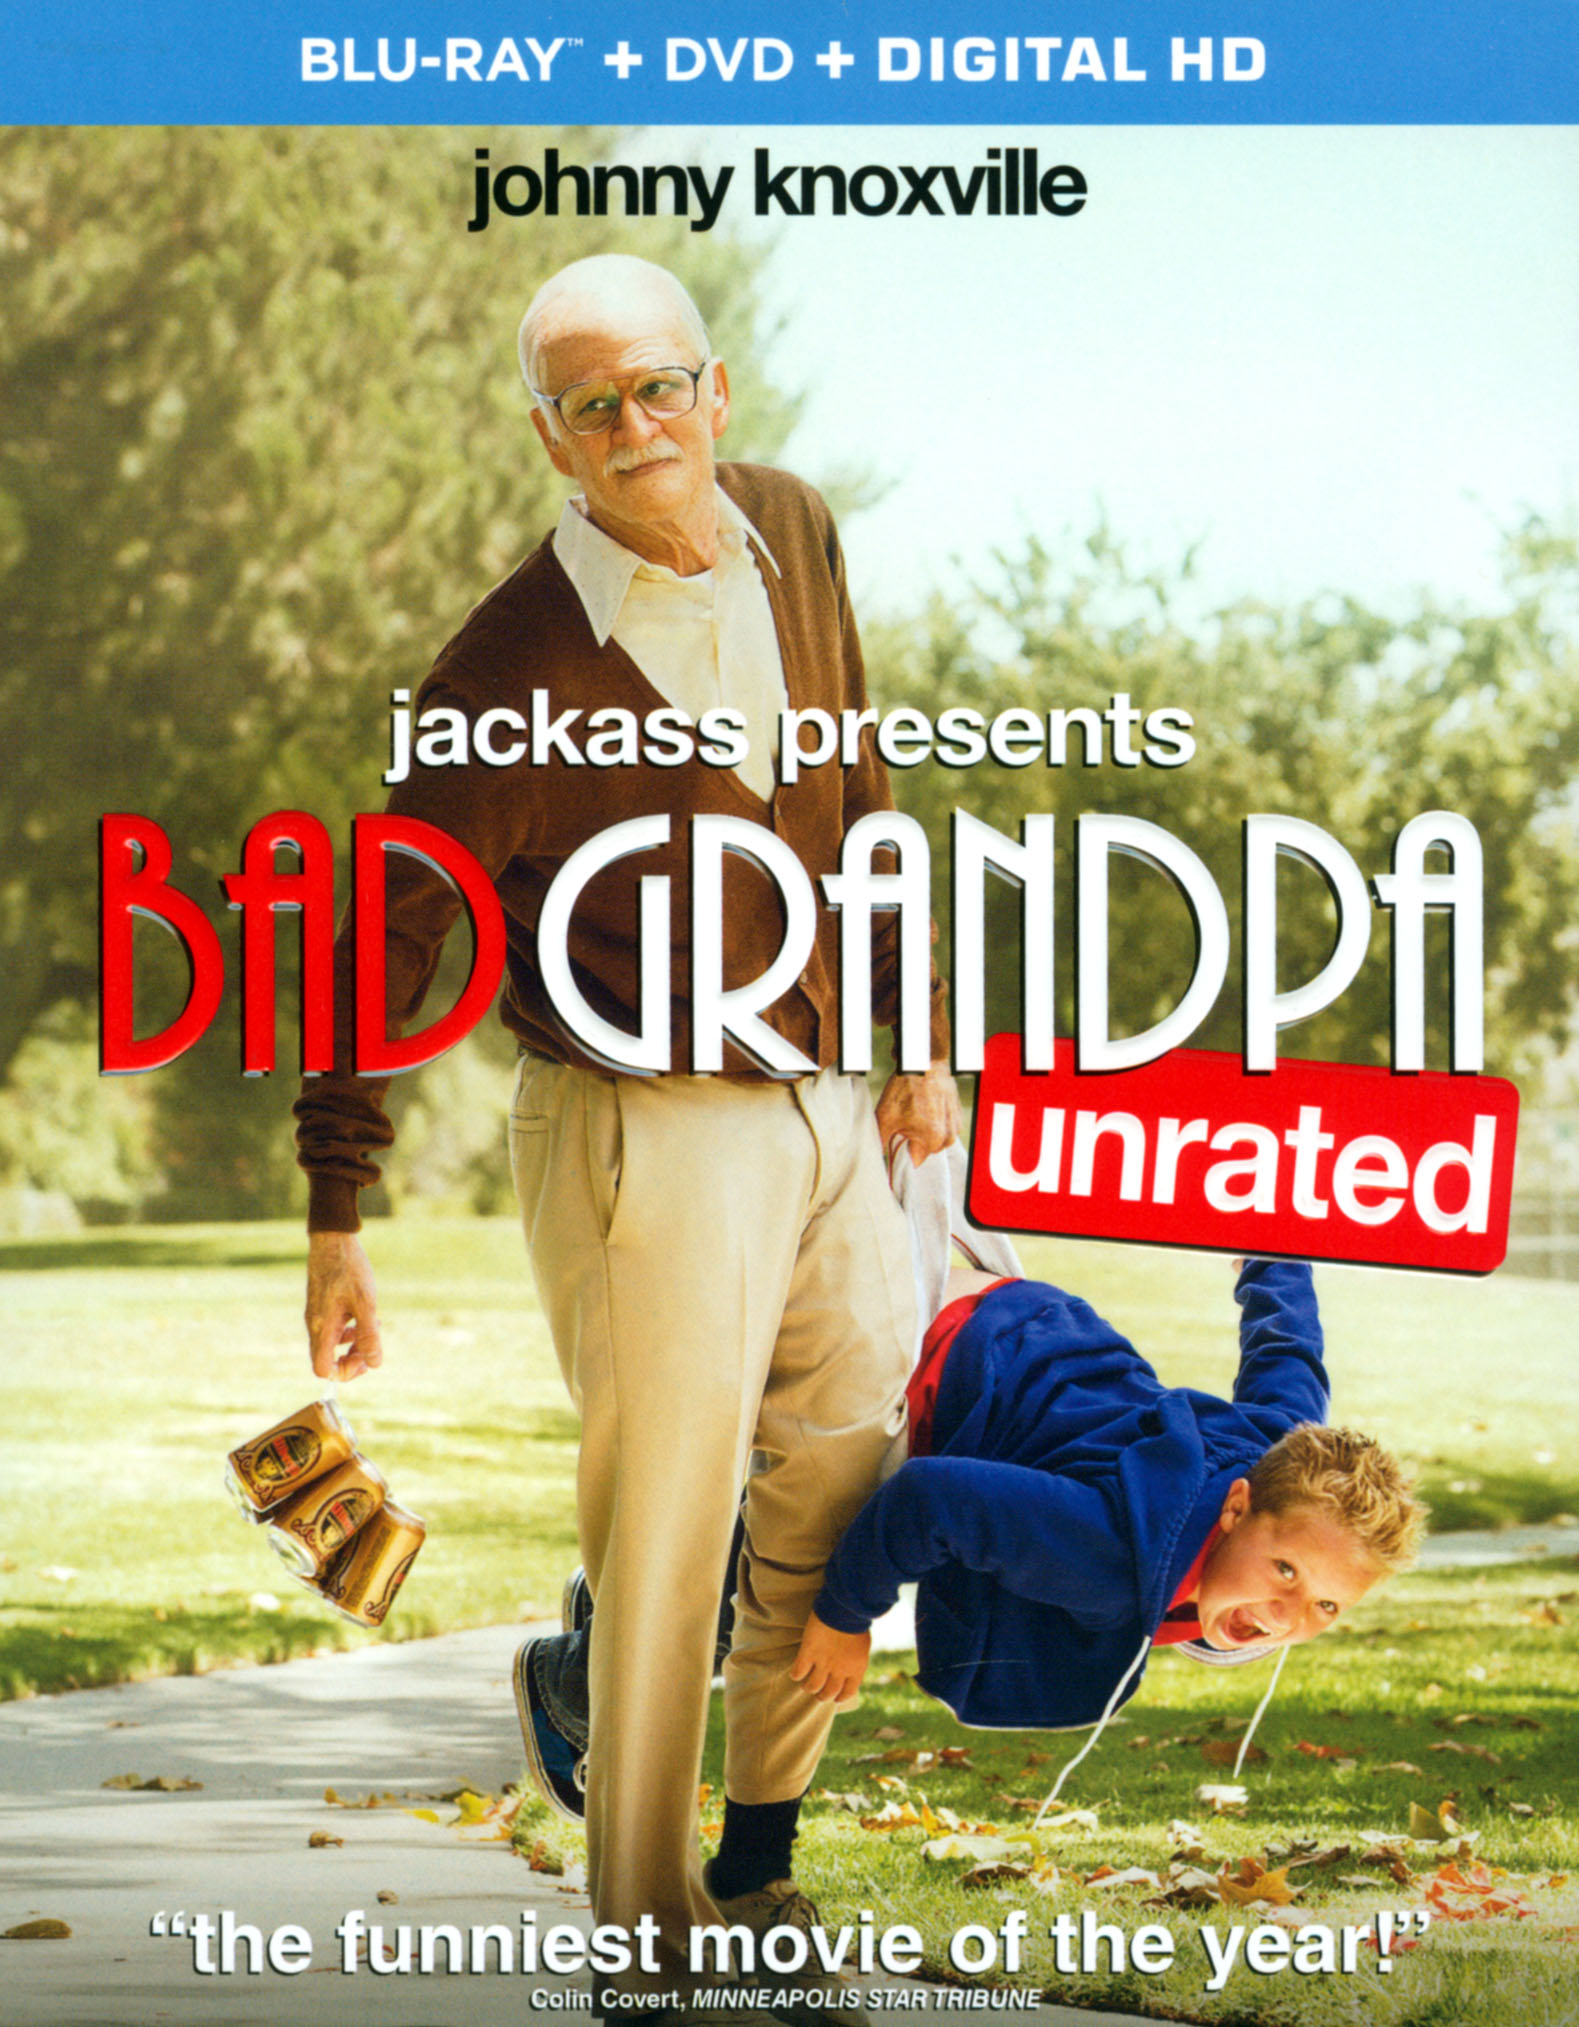 Jackass Presents: Bad Grandpa [Blu-ray] [2013] - Best Buy